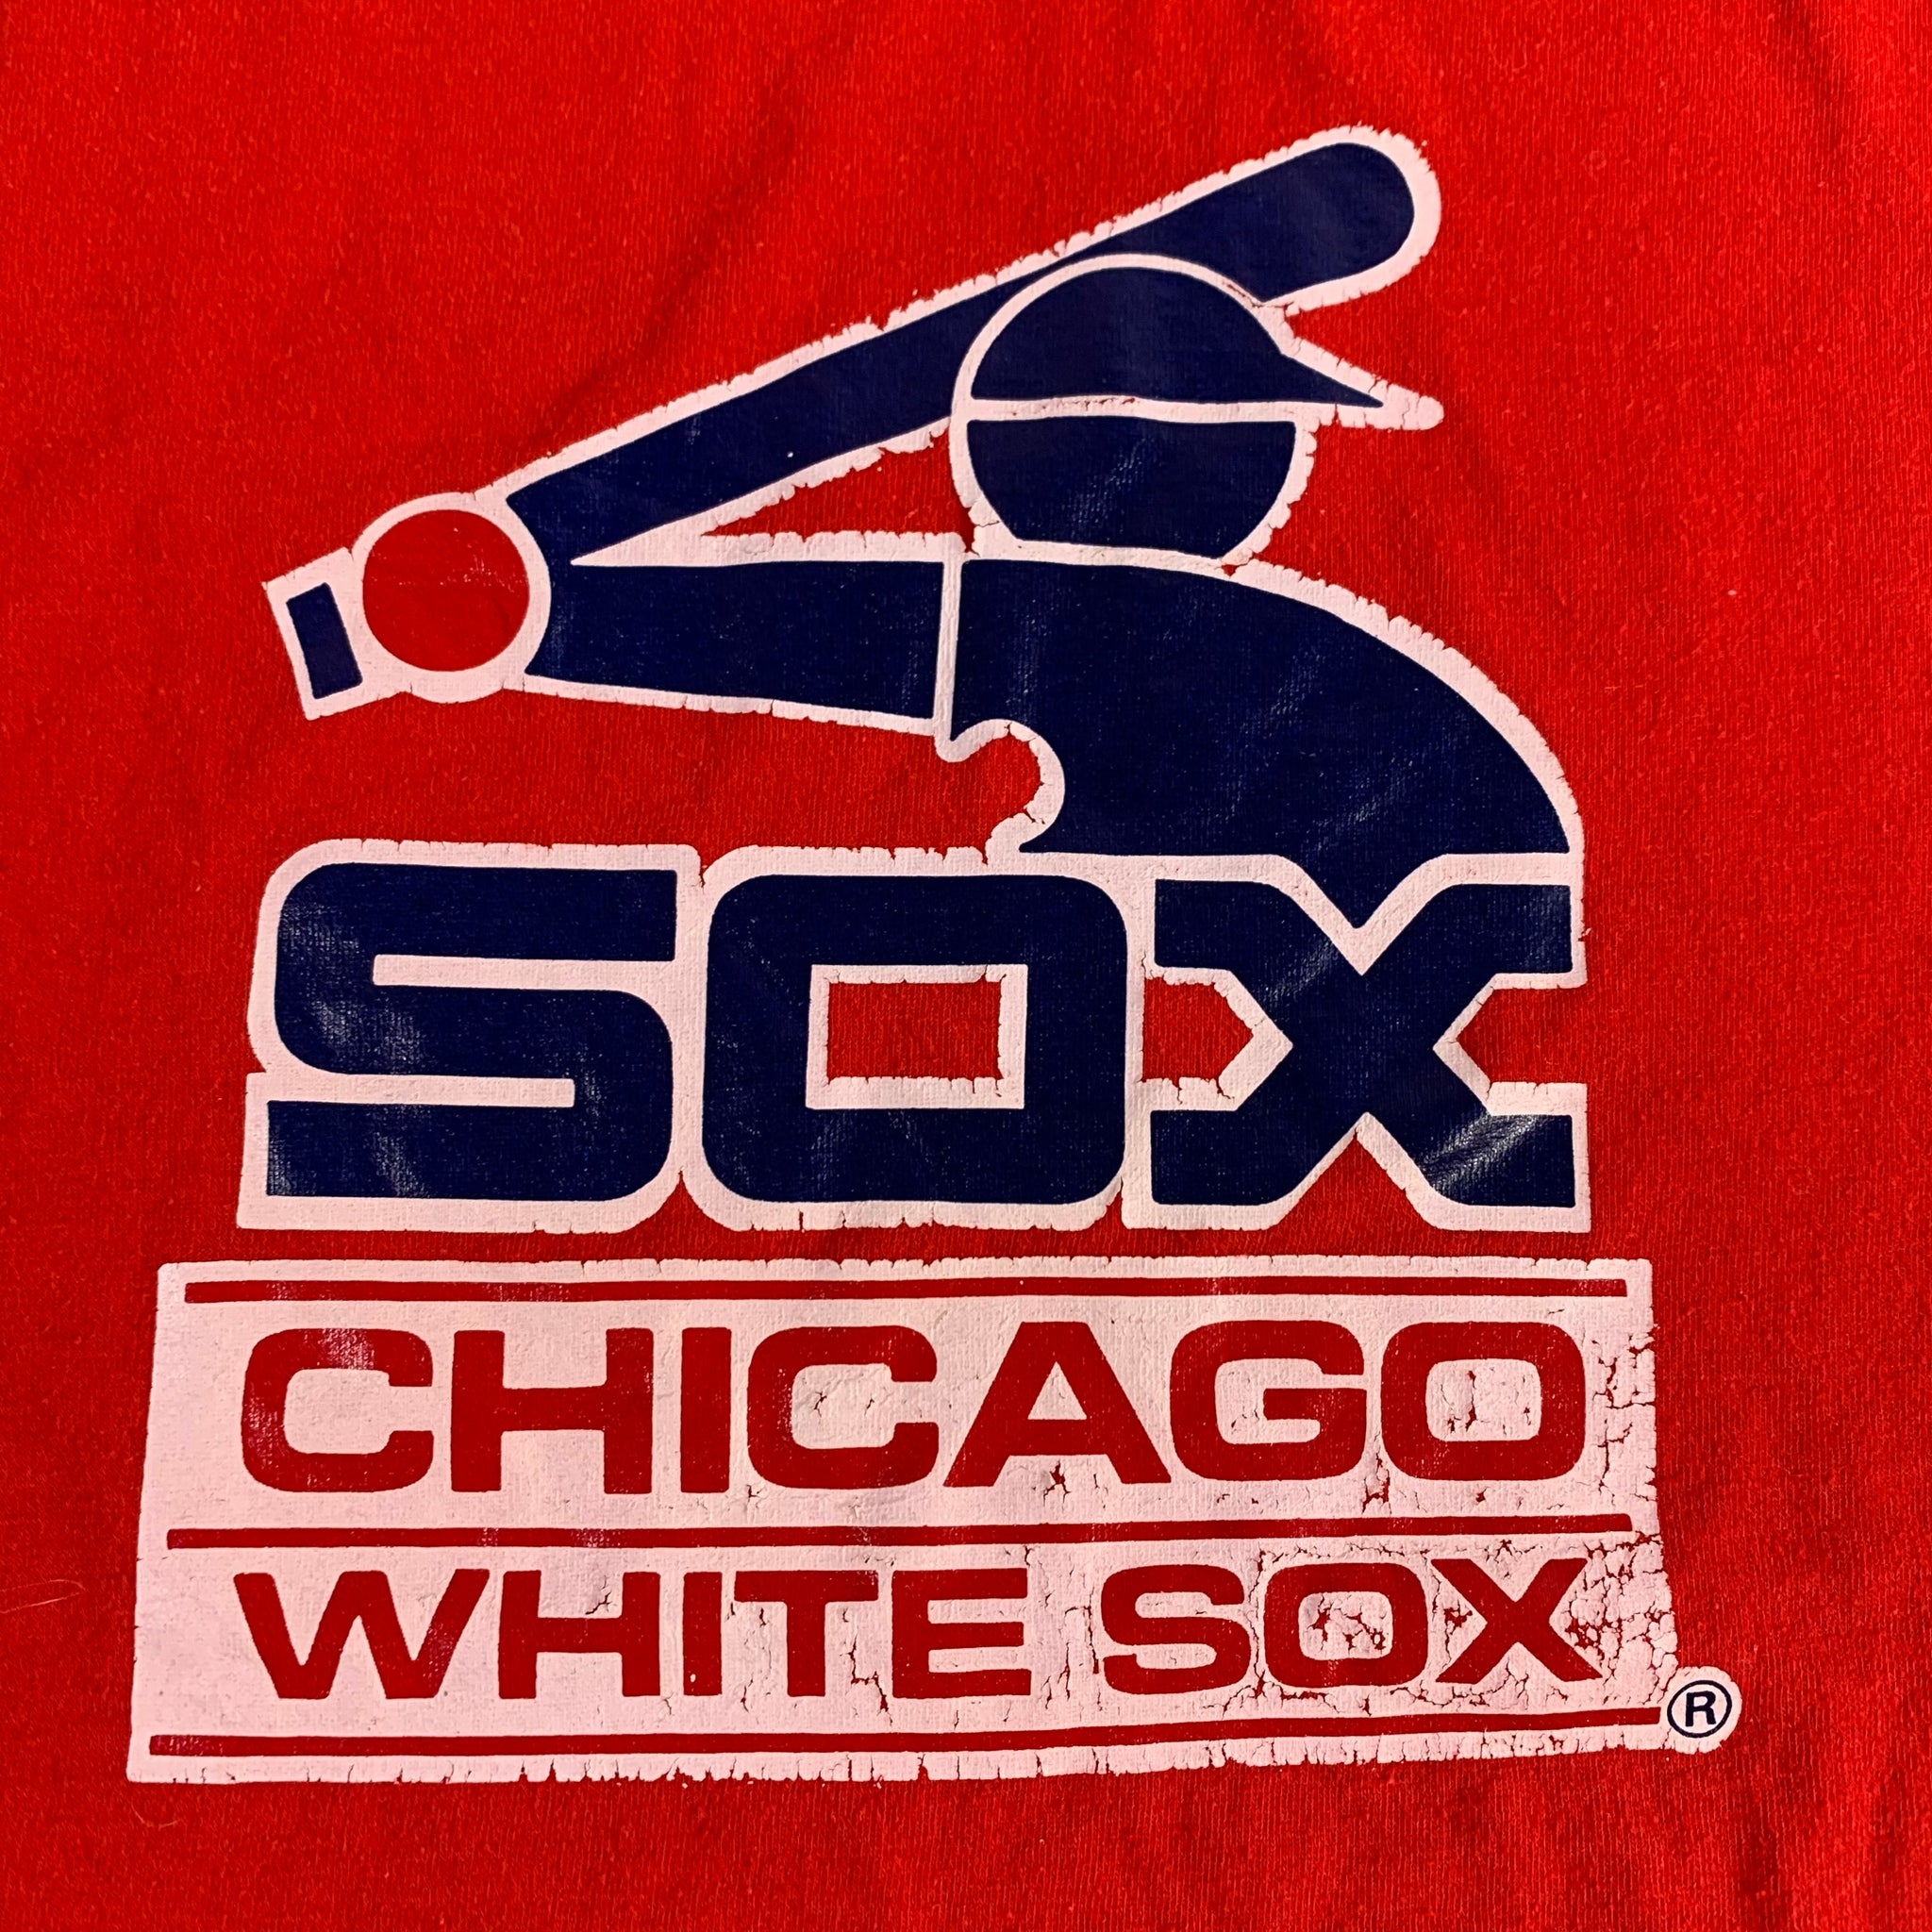 Vintage 1990s Screen Stars Comiskey Park Tshirt Chicago White 